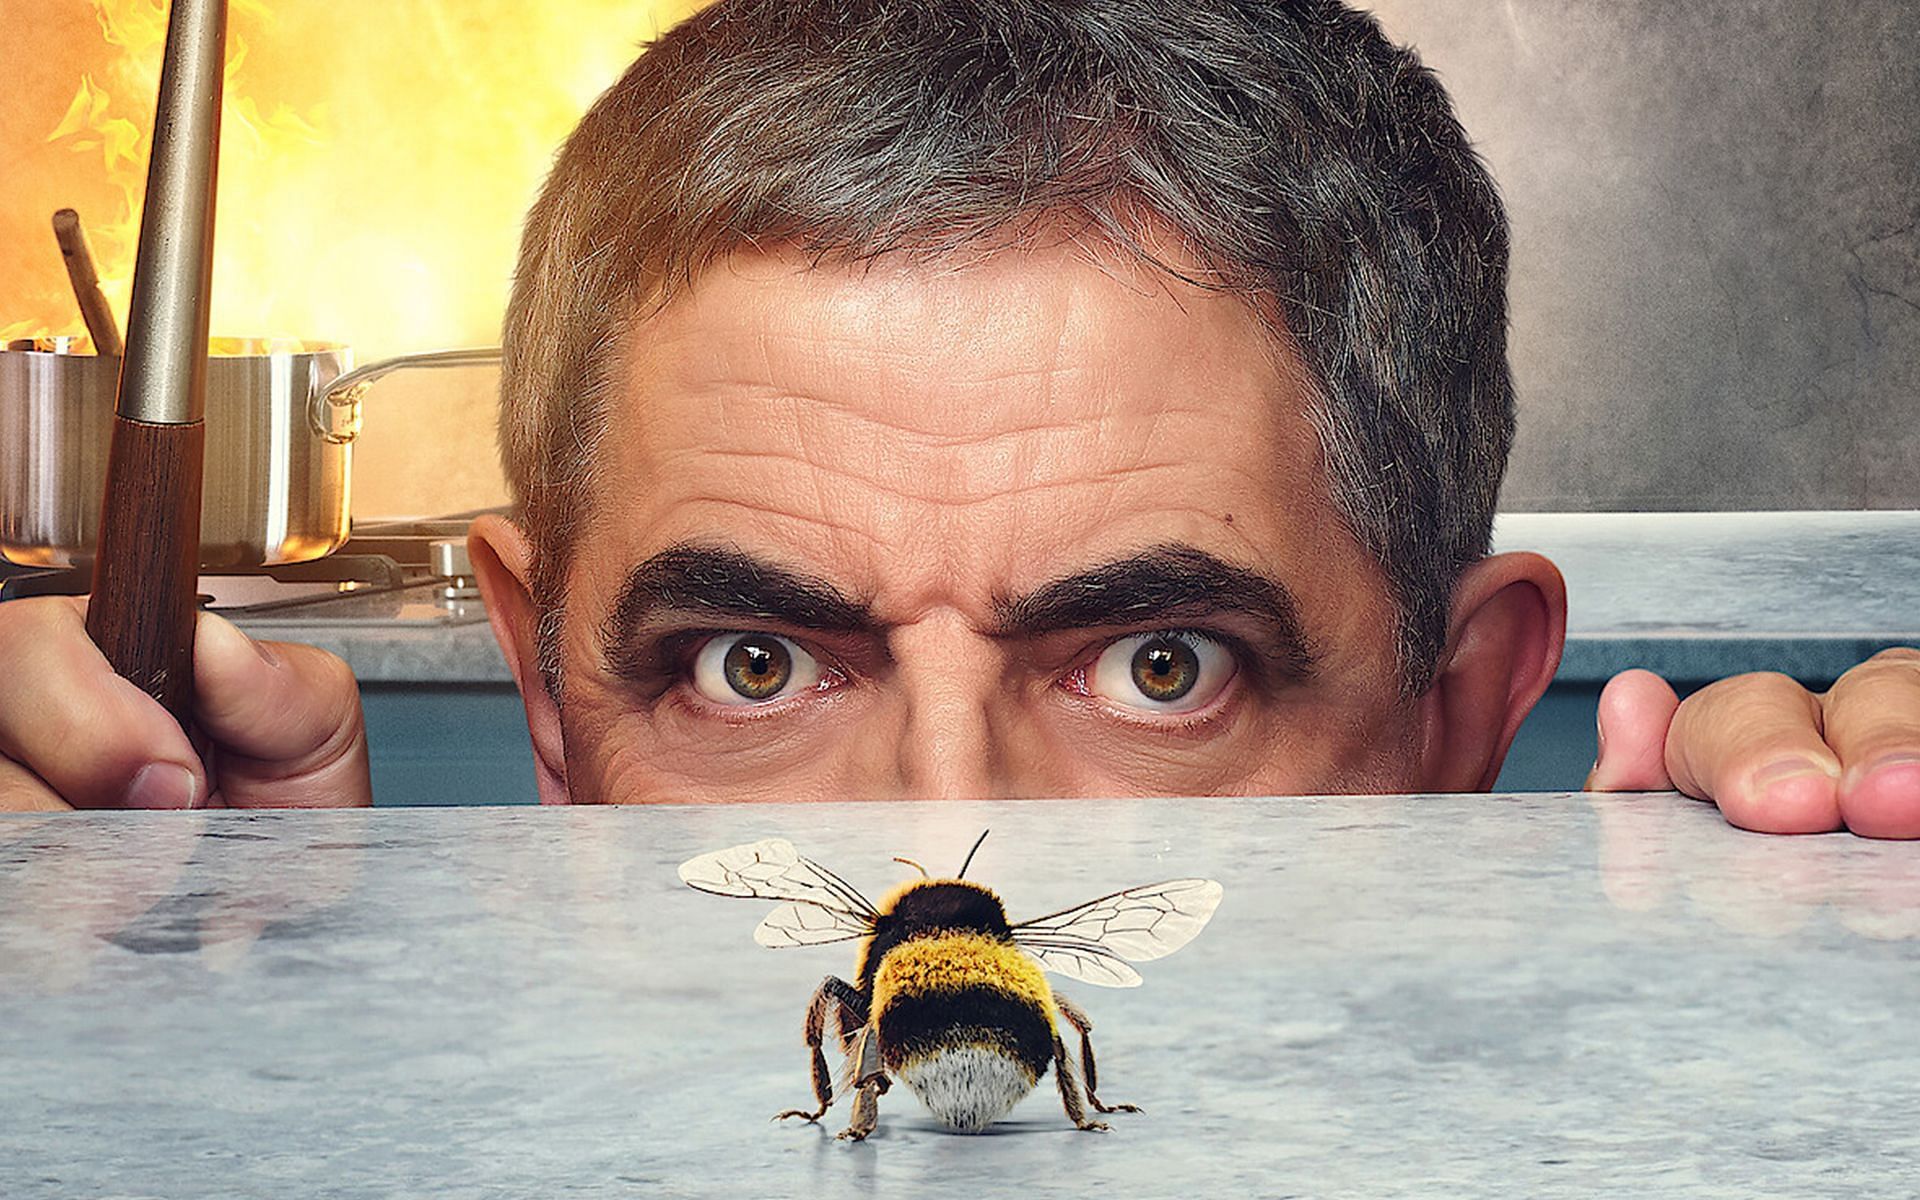 Rowan Atkinson in Man vs Bee (Image via Netflix)